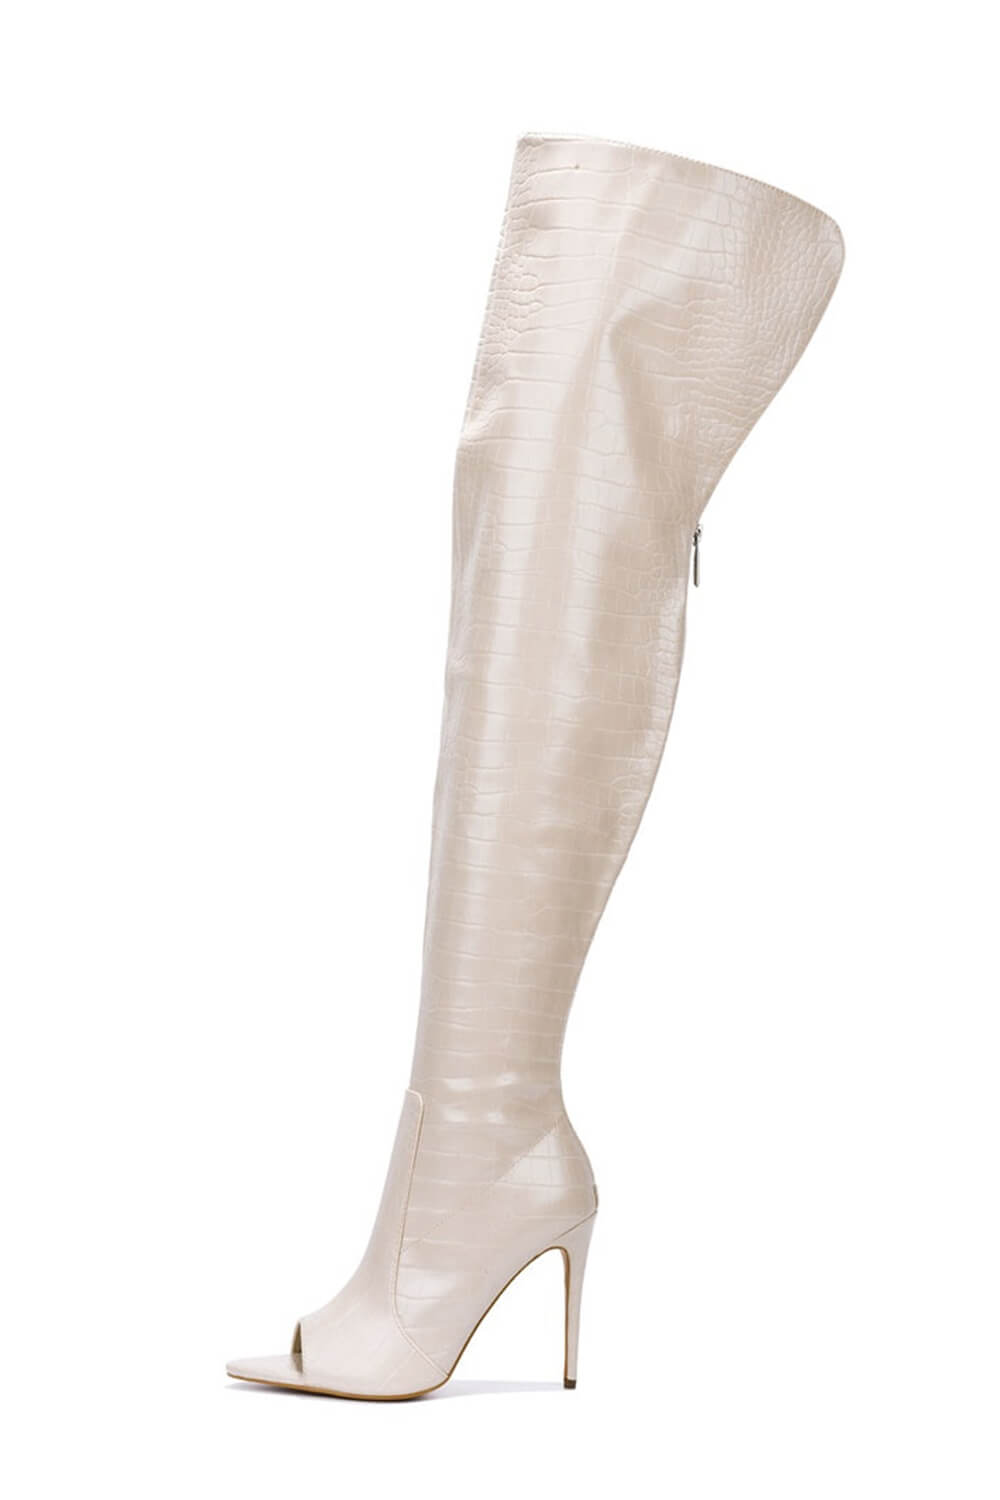 Crocodile-Effect Peep Toe Thigh High Stiletto Boots - White